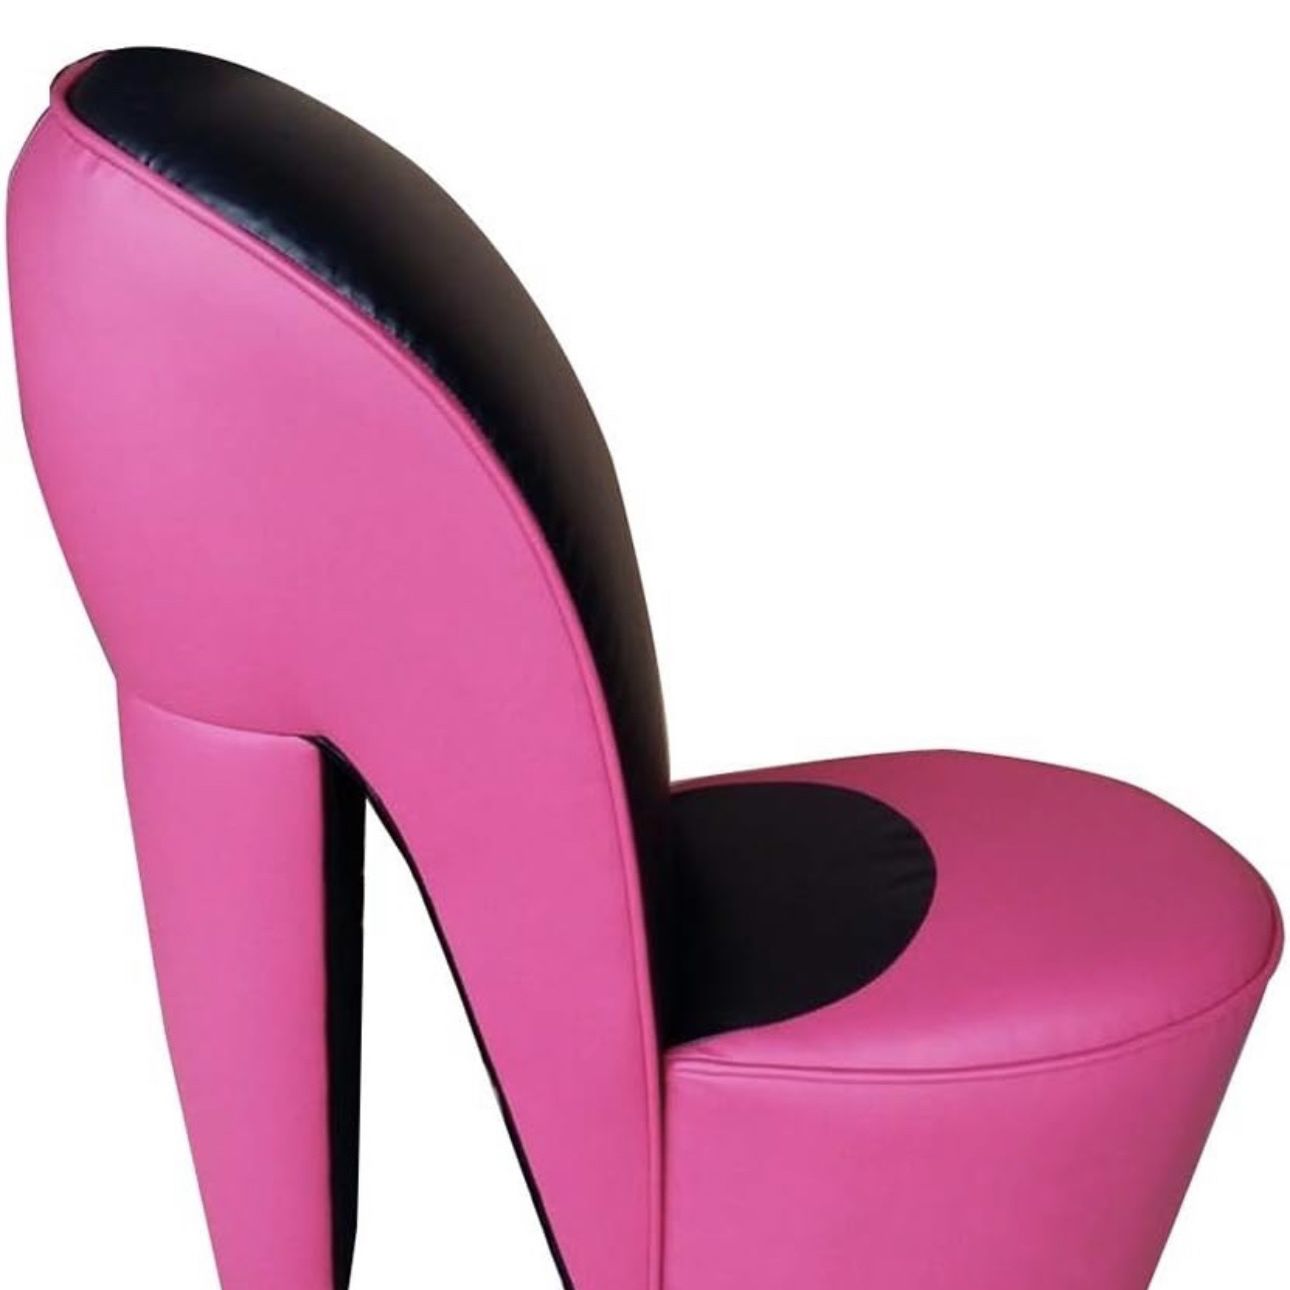 Pink & Black High Heel Chair 